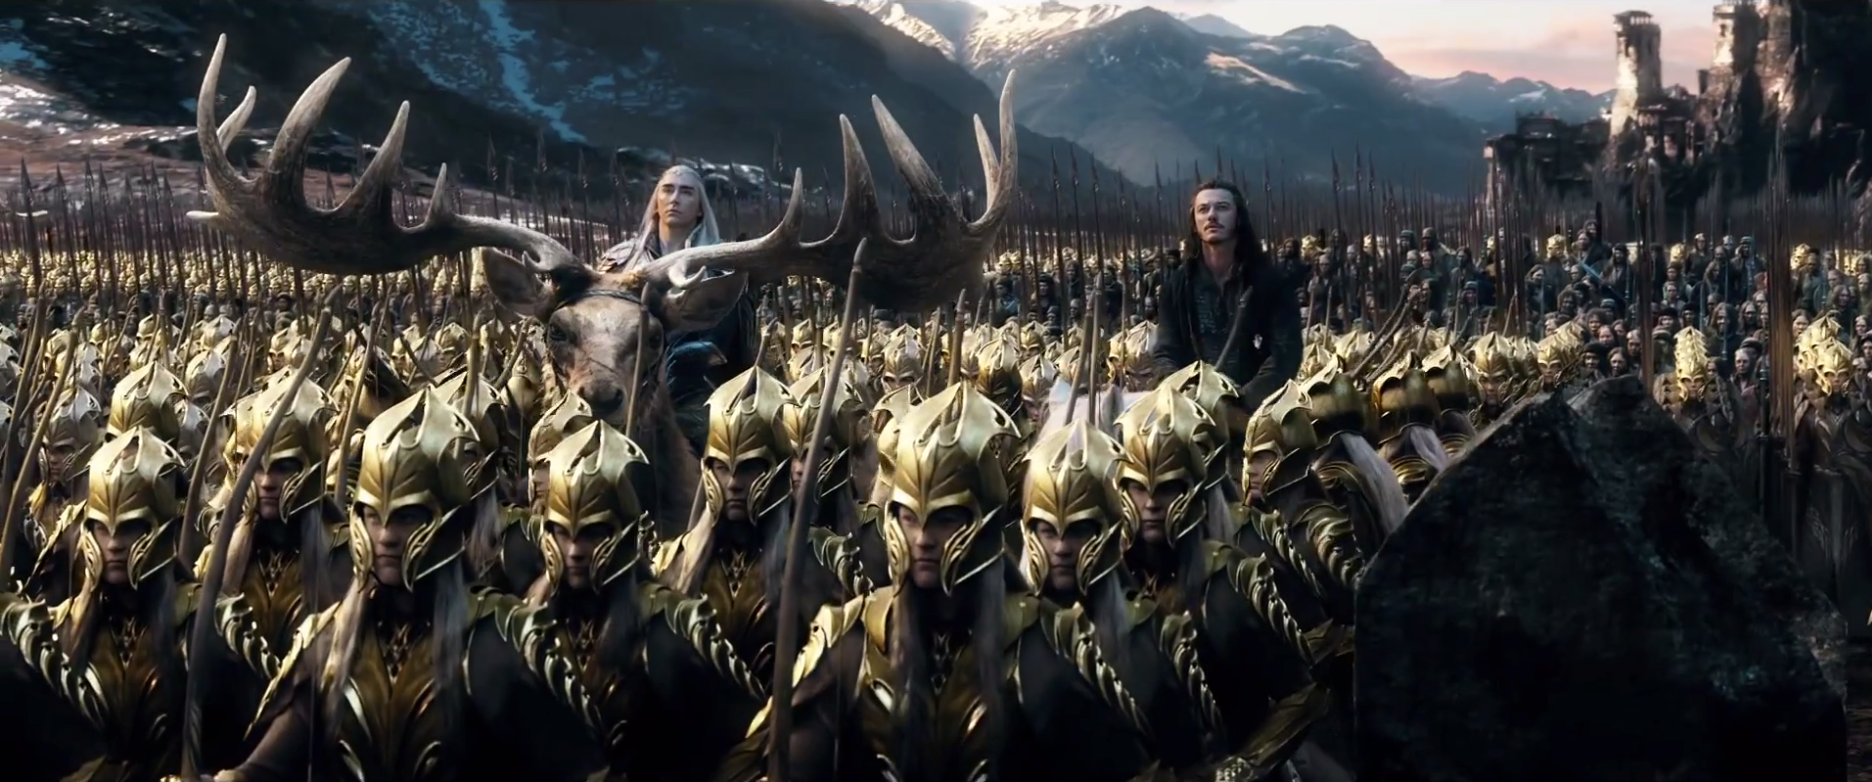 Хоббит битва пяти воинств Саурон. Армия эльфов битва пяти воинств. Трандуил Хоббит битва пяти воинств. Трандуил армия эльфов. Властелин колец битва 5